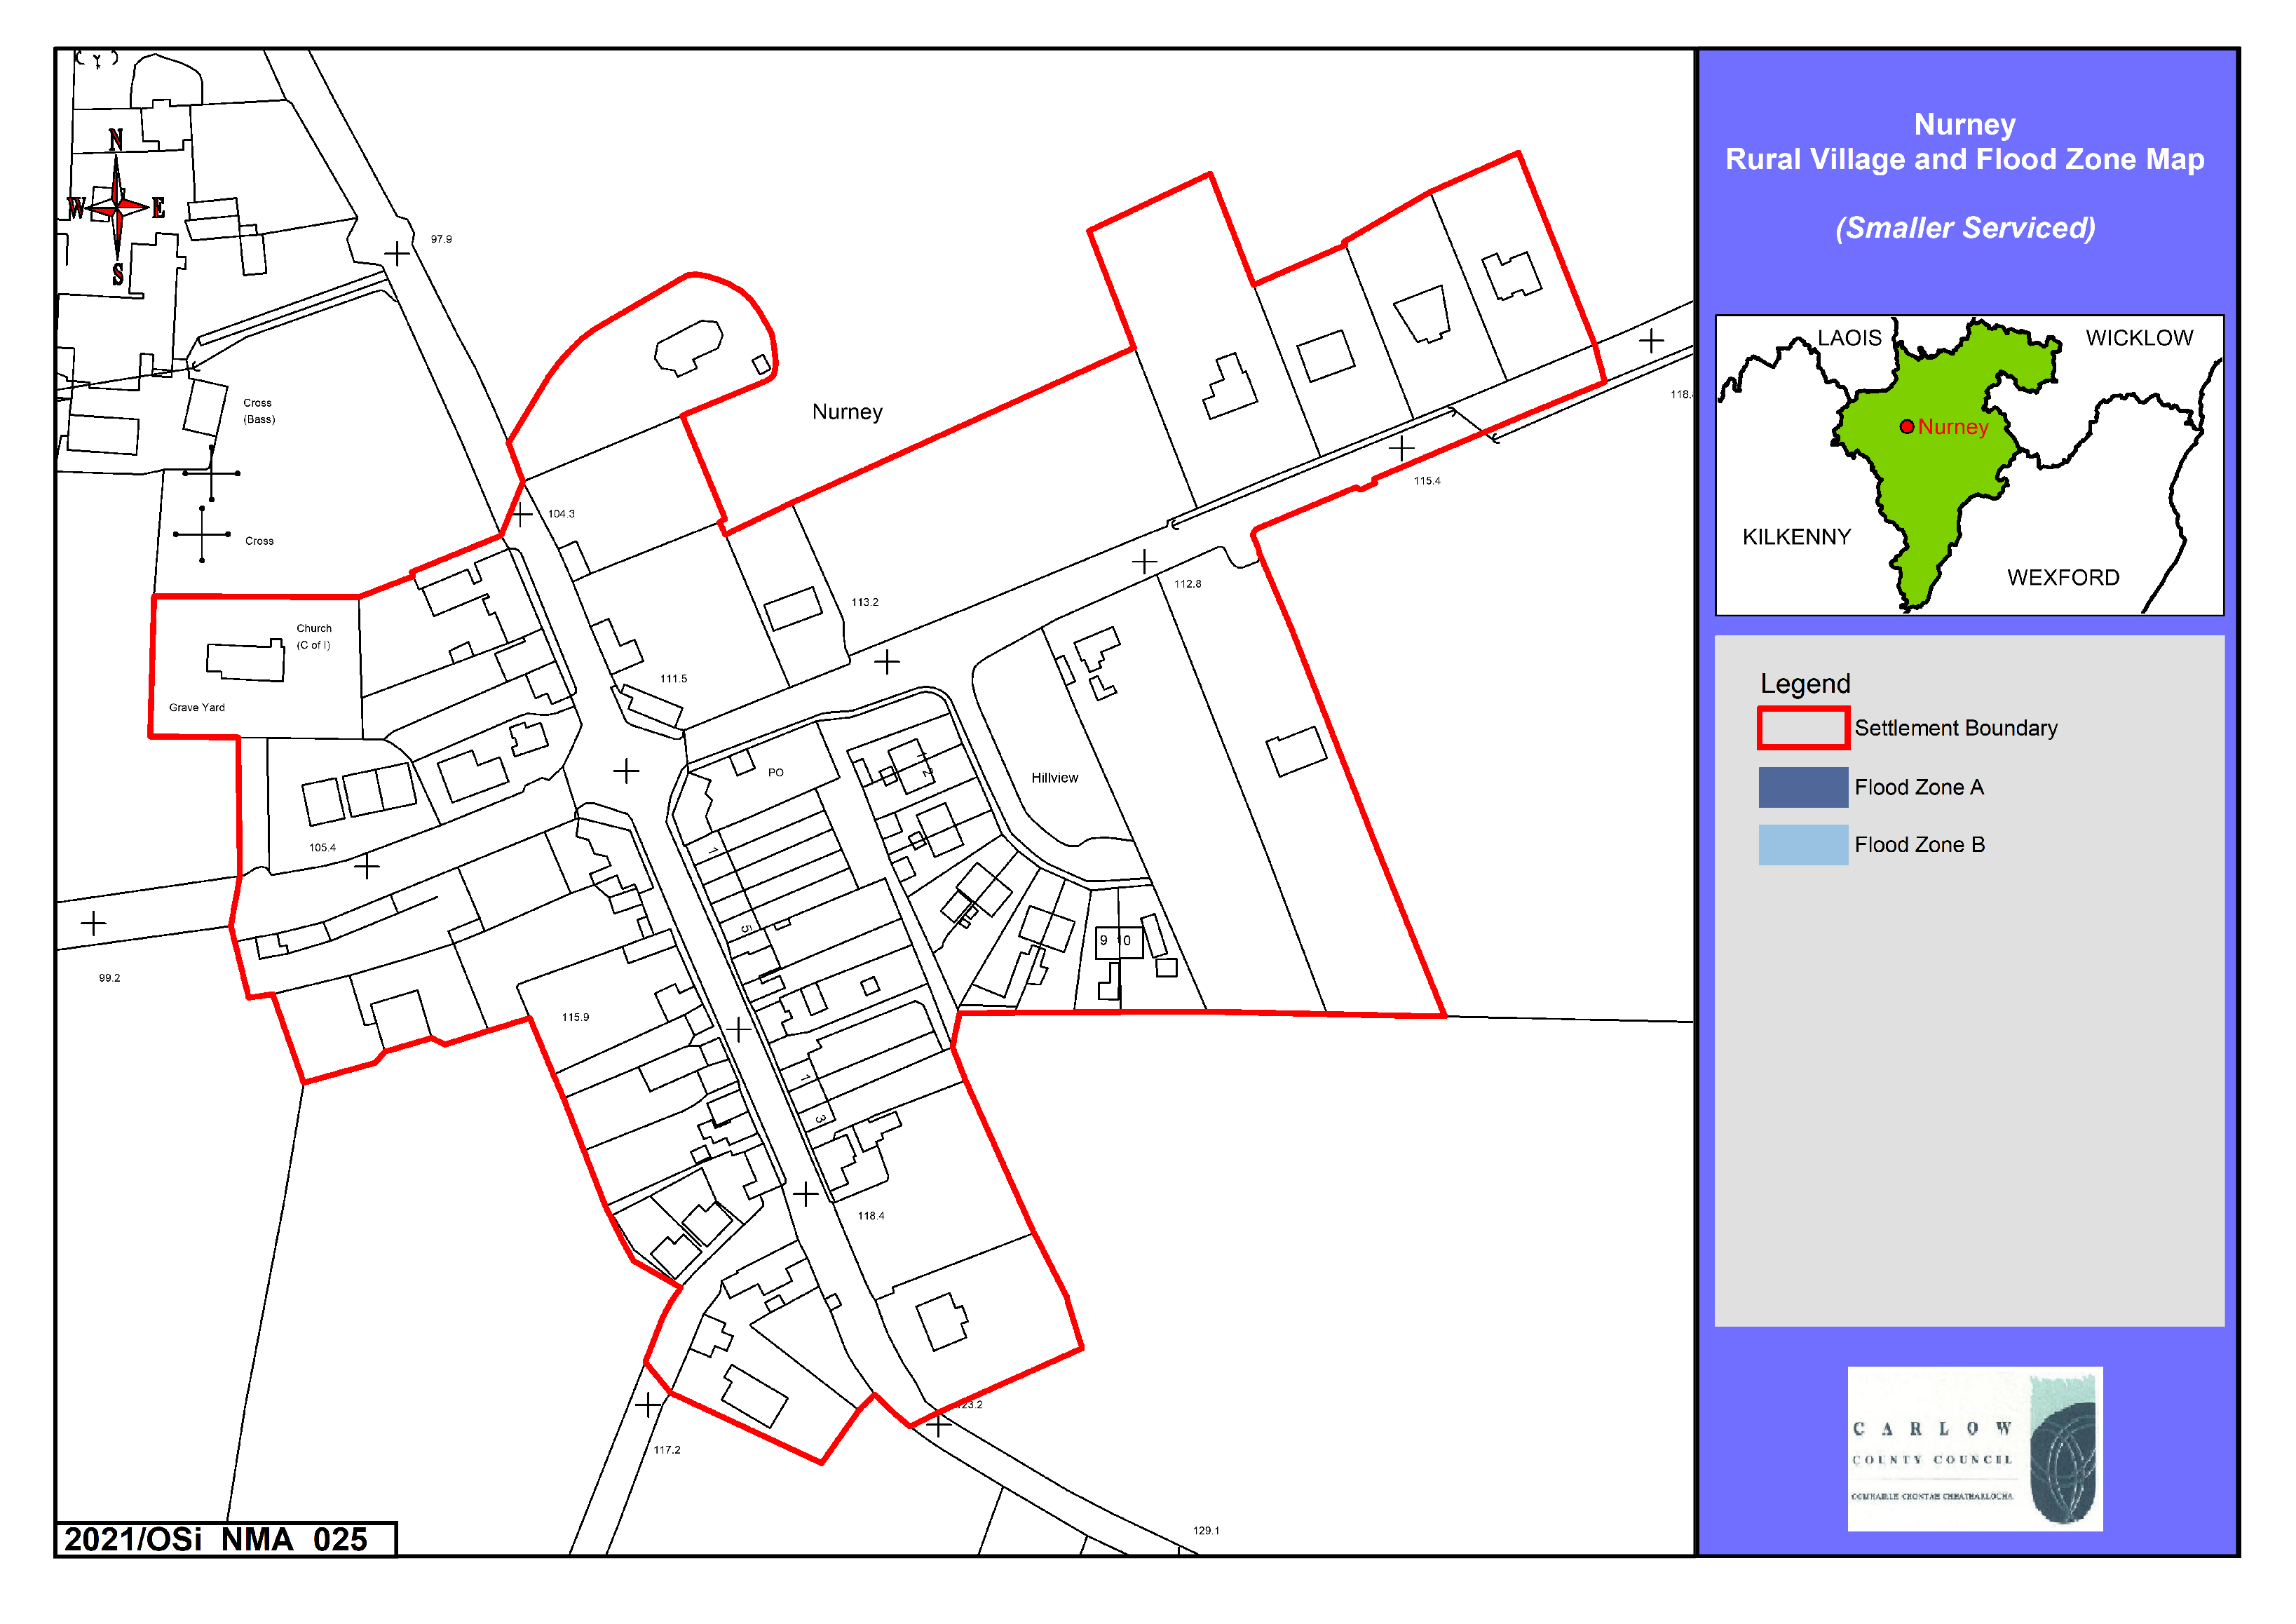 Nurney Rural Village and Flood Zone Map